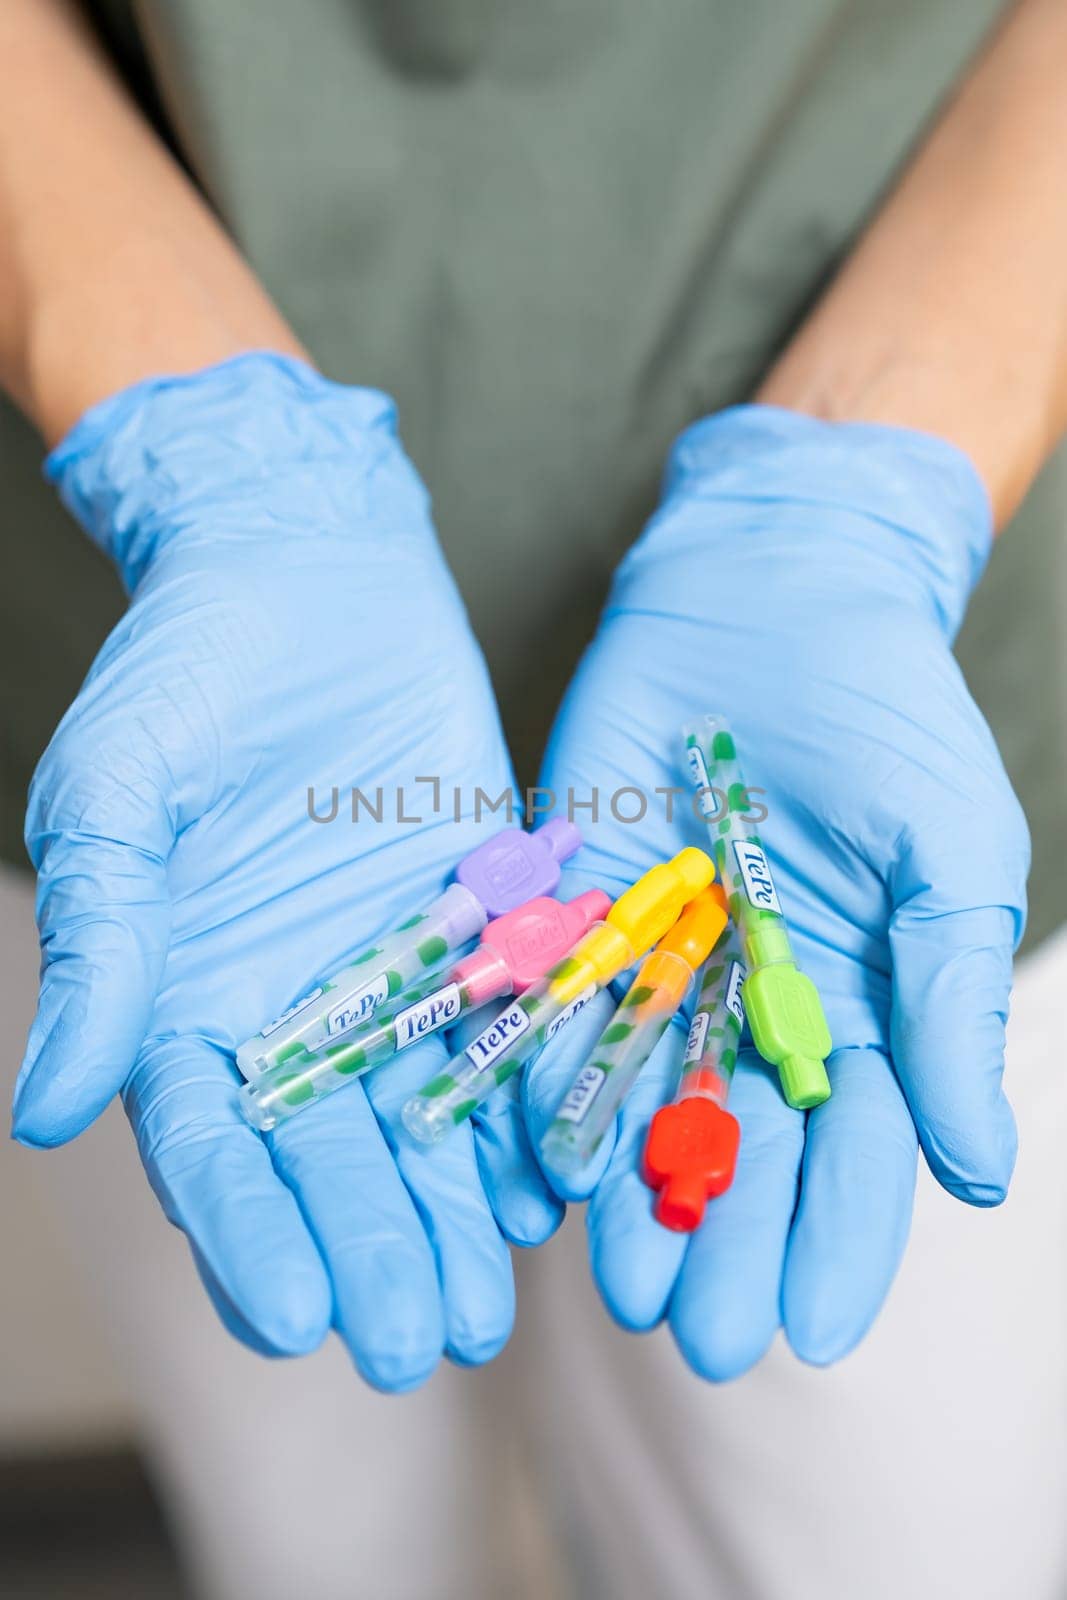 Interdental Toothbrushes in dentists hands in rubber gloves. December 2023, Prague, Czech Republic